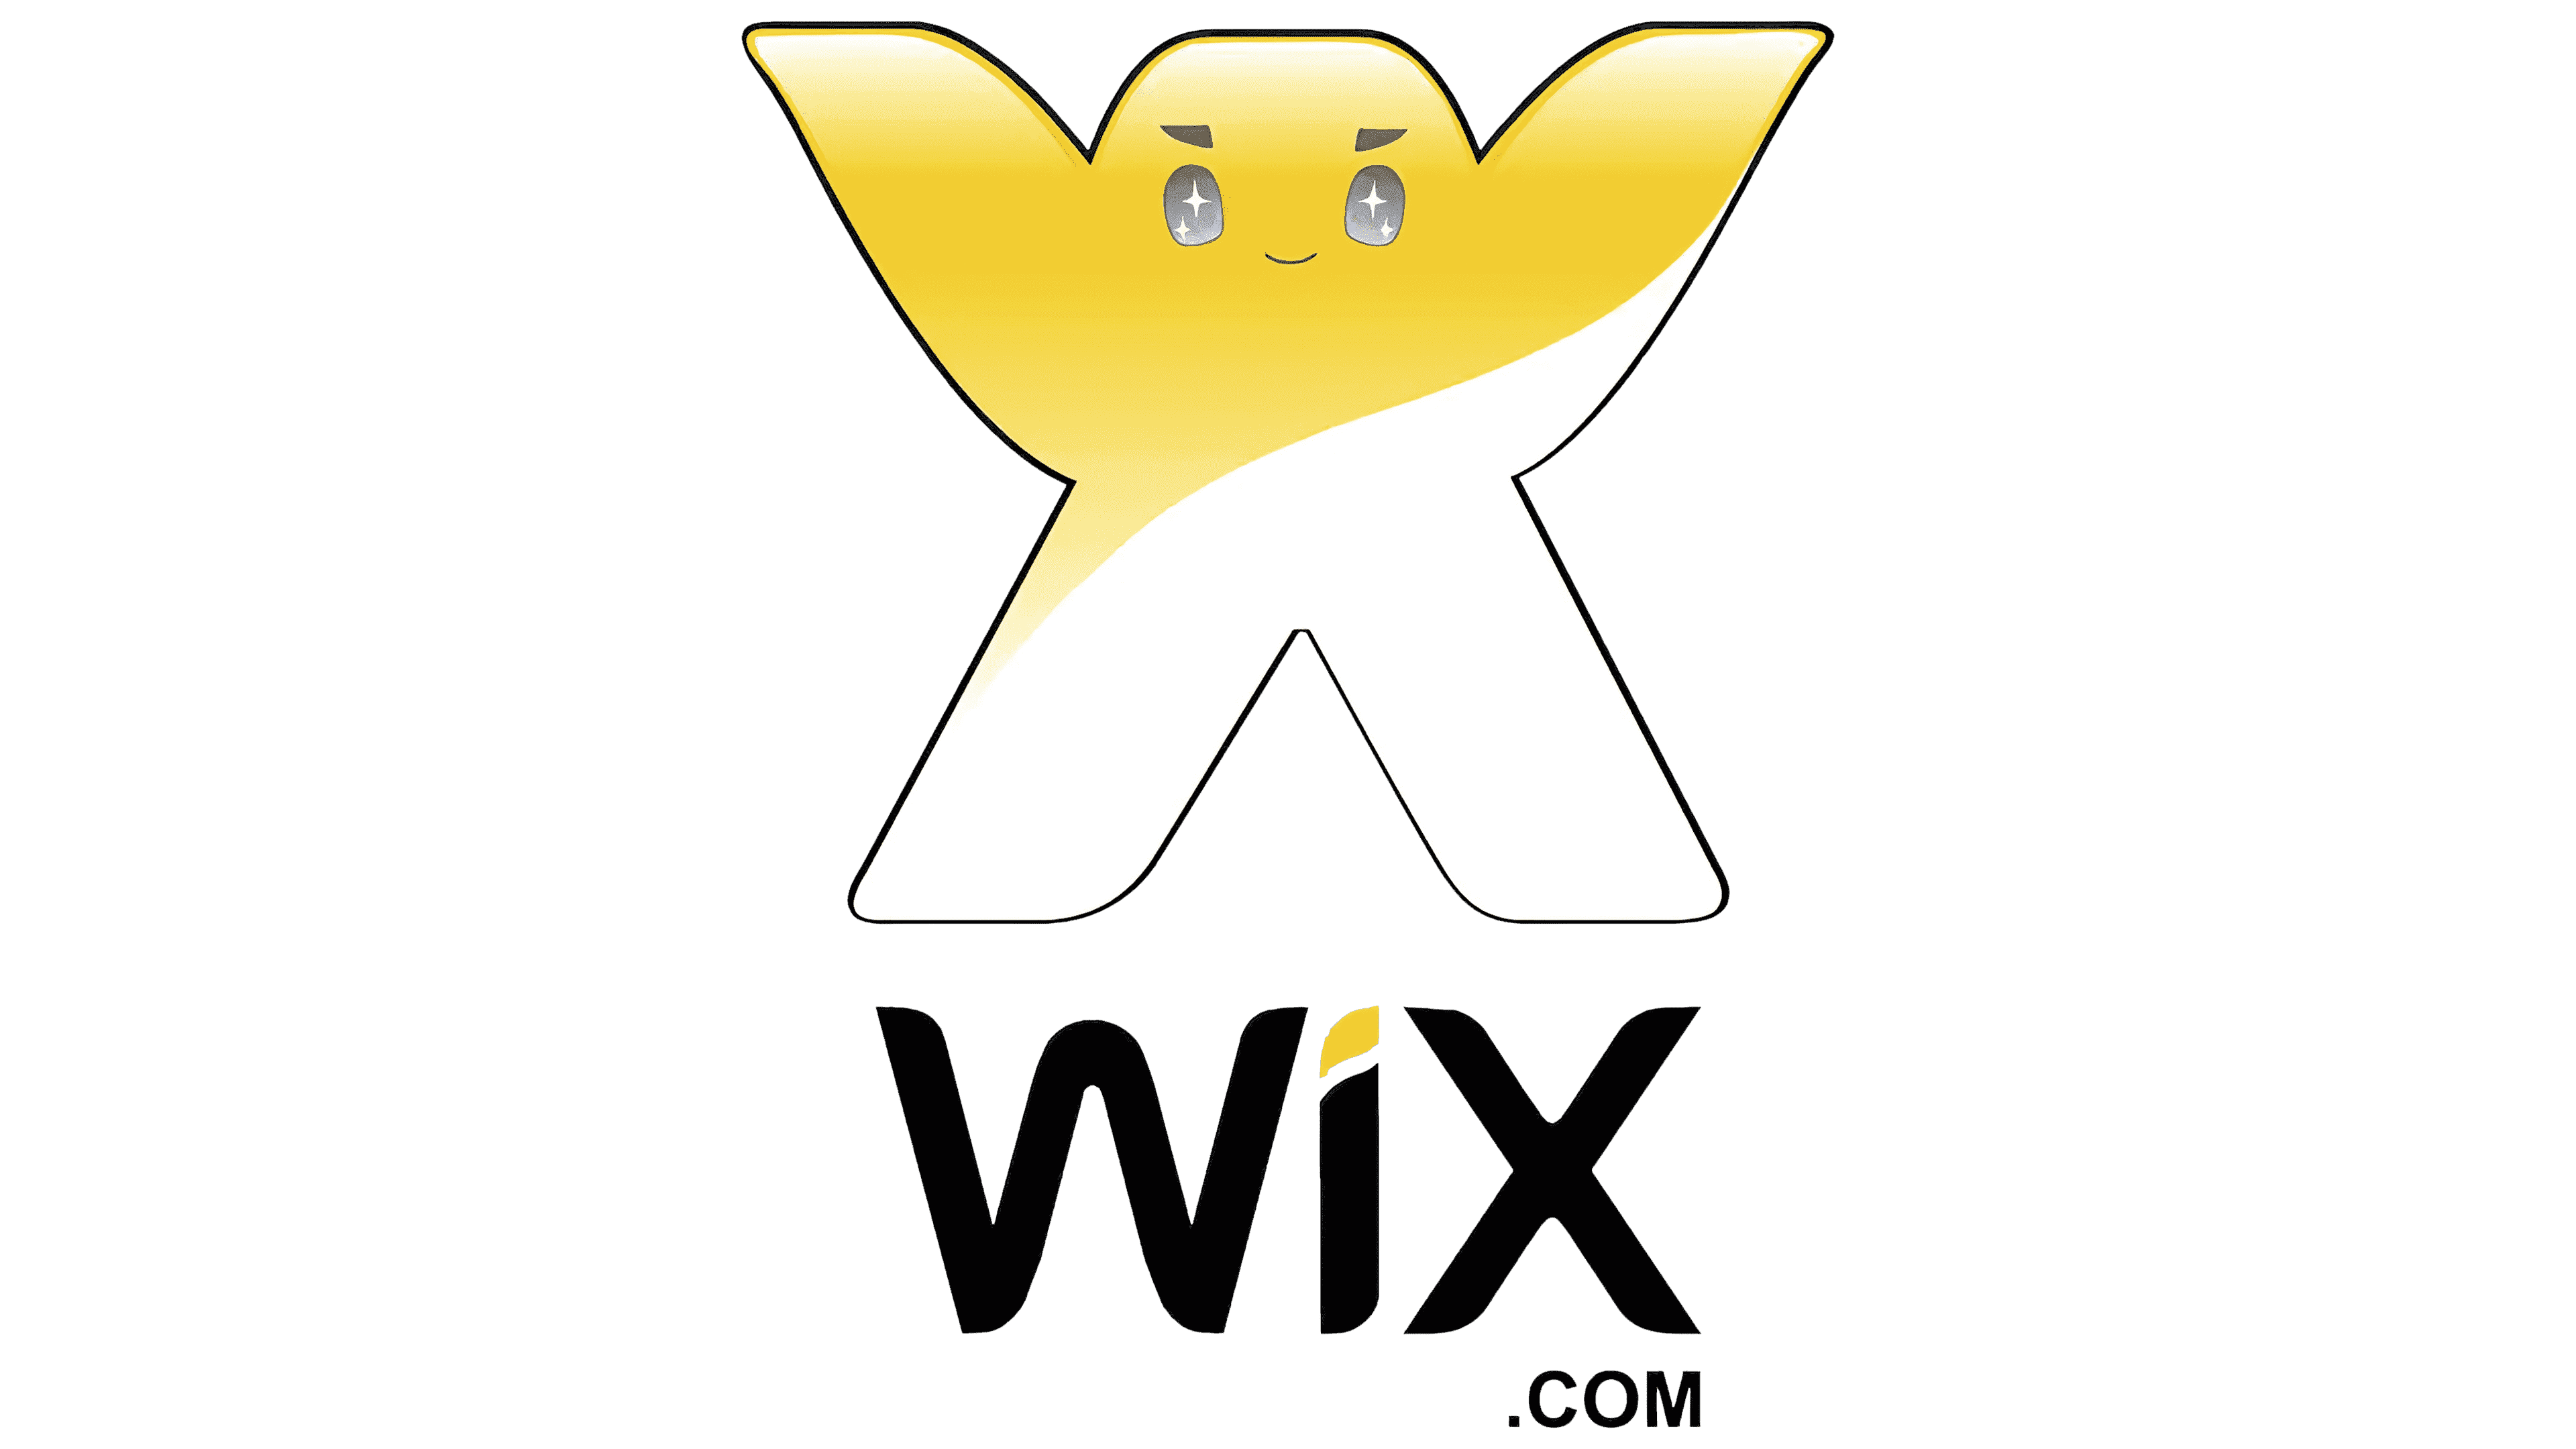 wix logo design